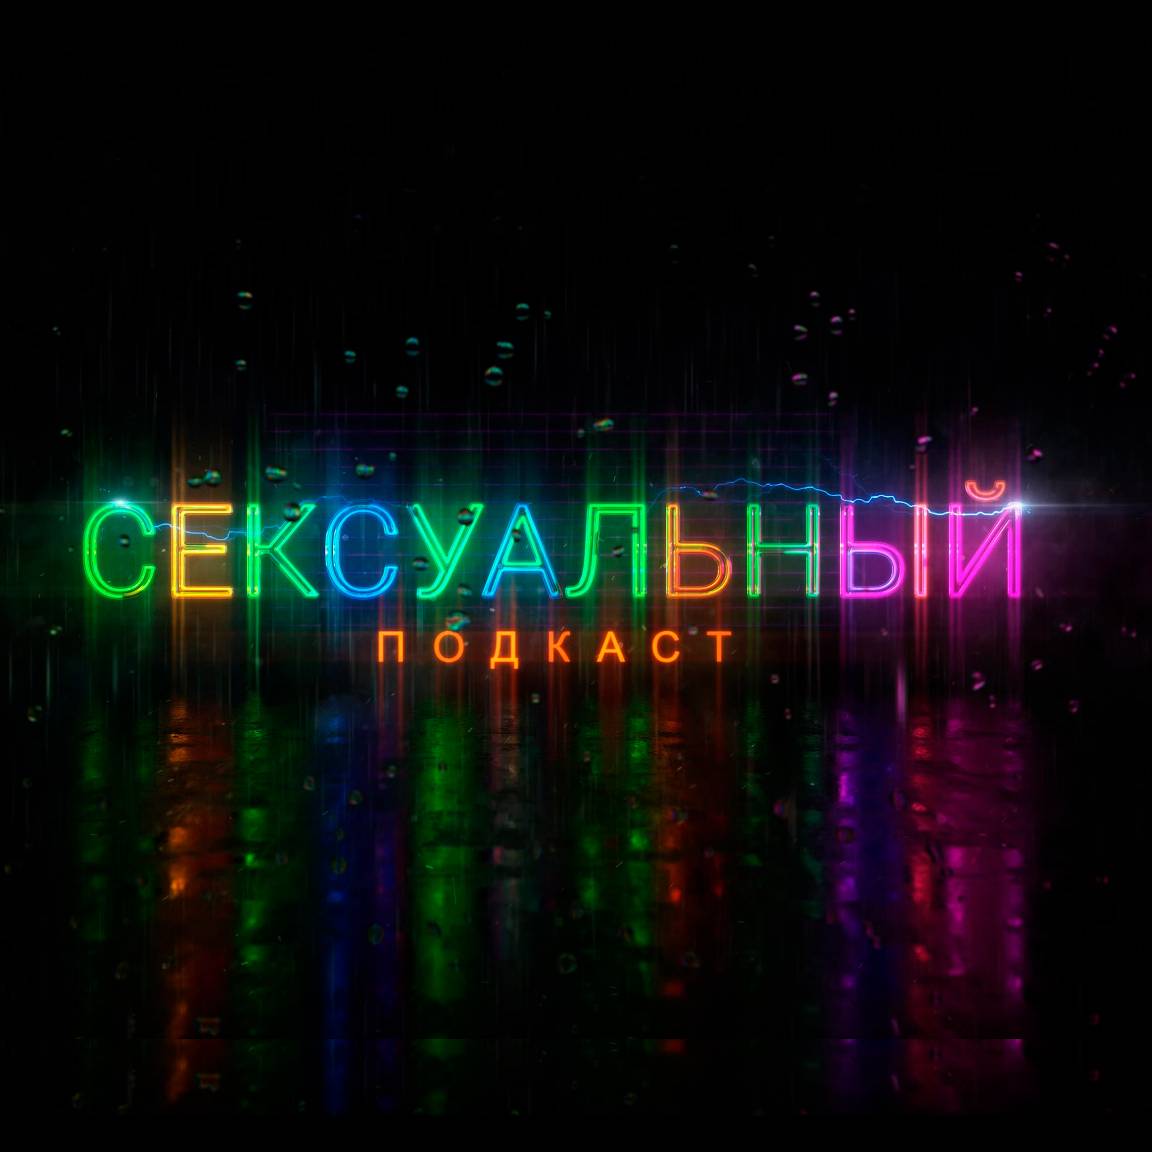 https://pic.rutubelist.ru/user/d5/cc/d5cce9fae0267948d377f8d82e0a8748.jpg